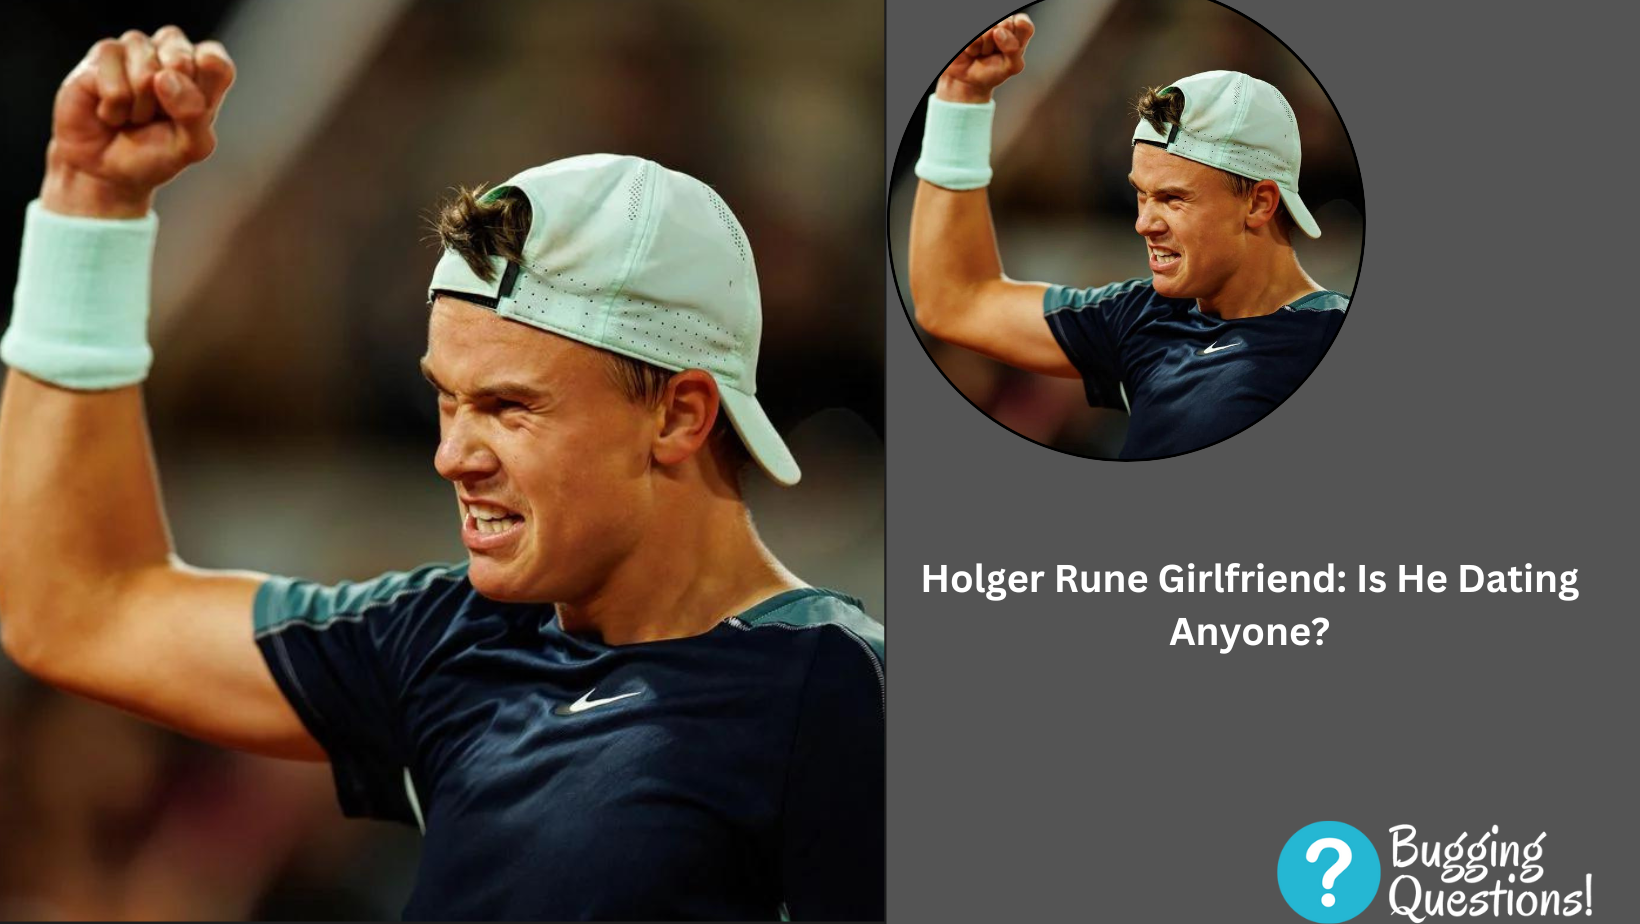 Holger Rune Girlfriend: Is He Dating Anyone?